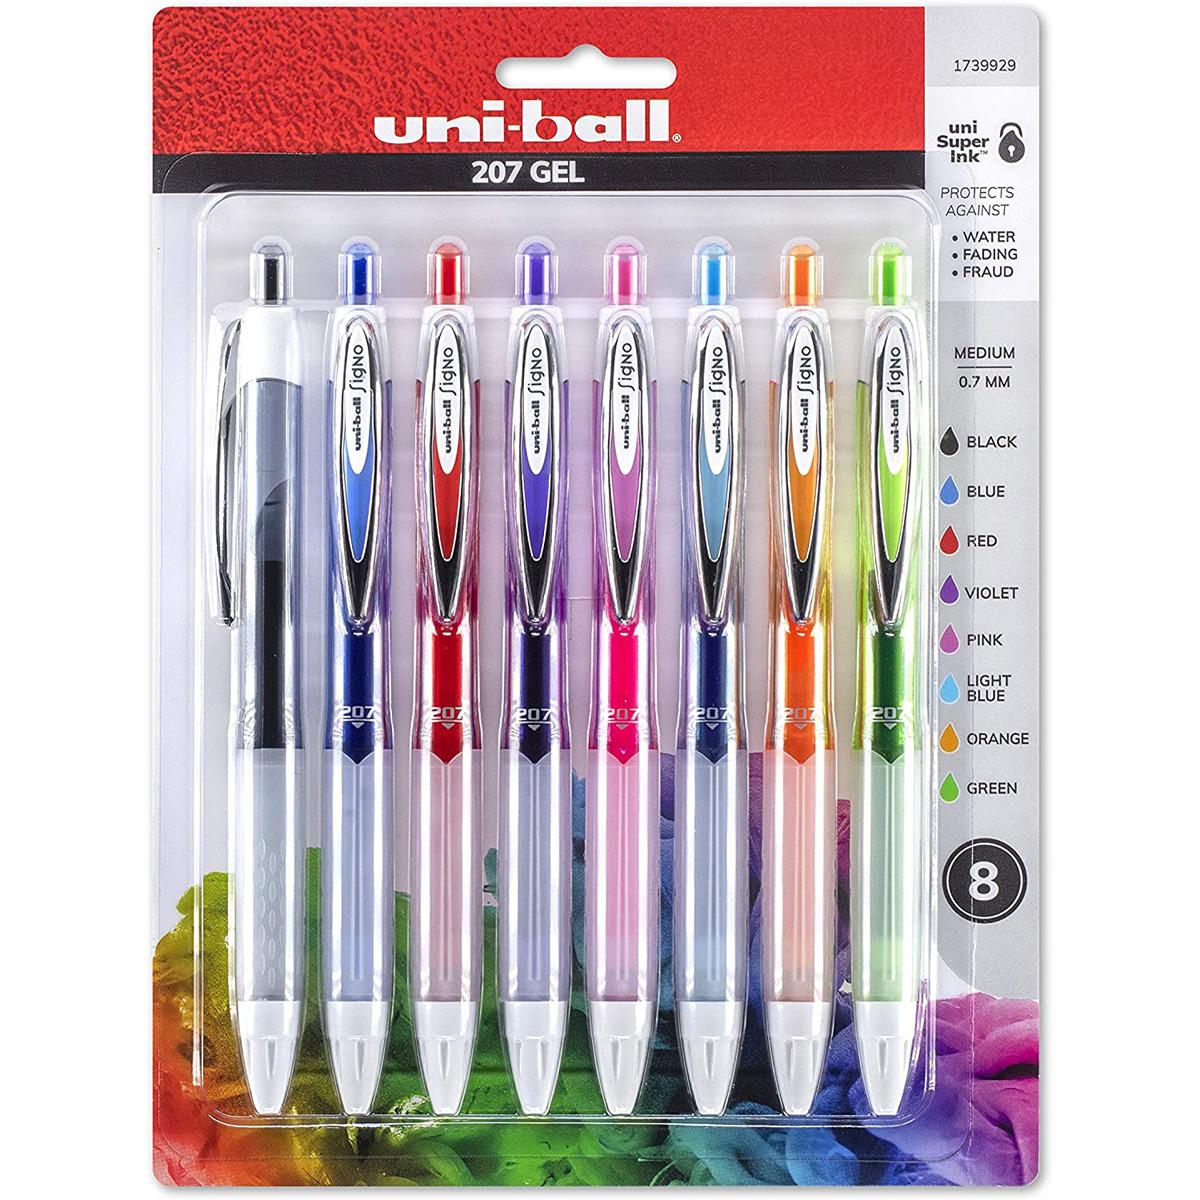 8 uni-ball 207 Medium Point Retractable Gel Pens for $5.73